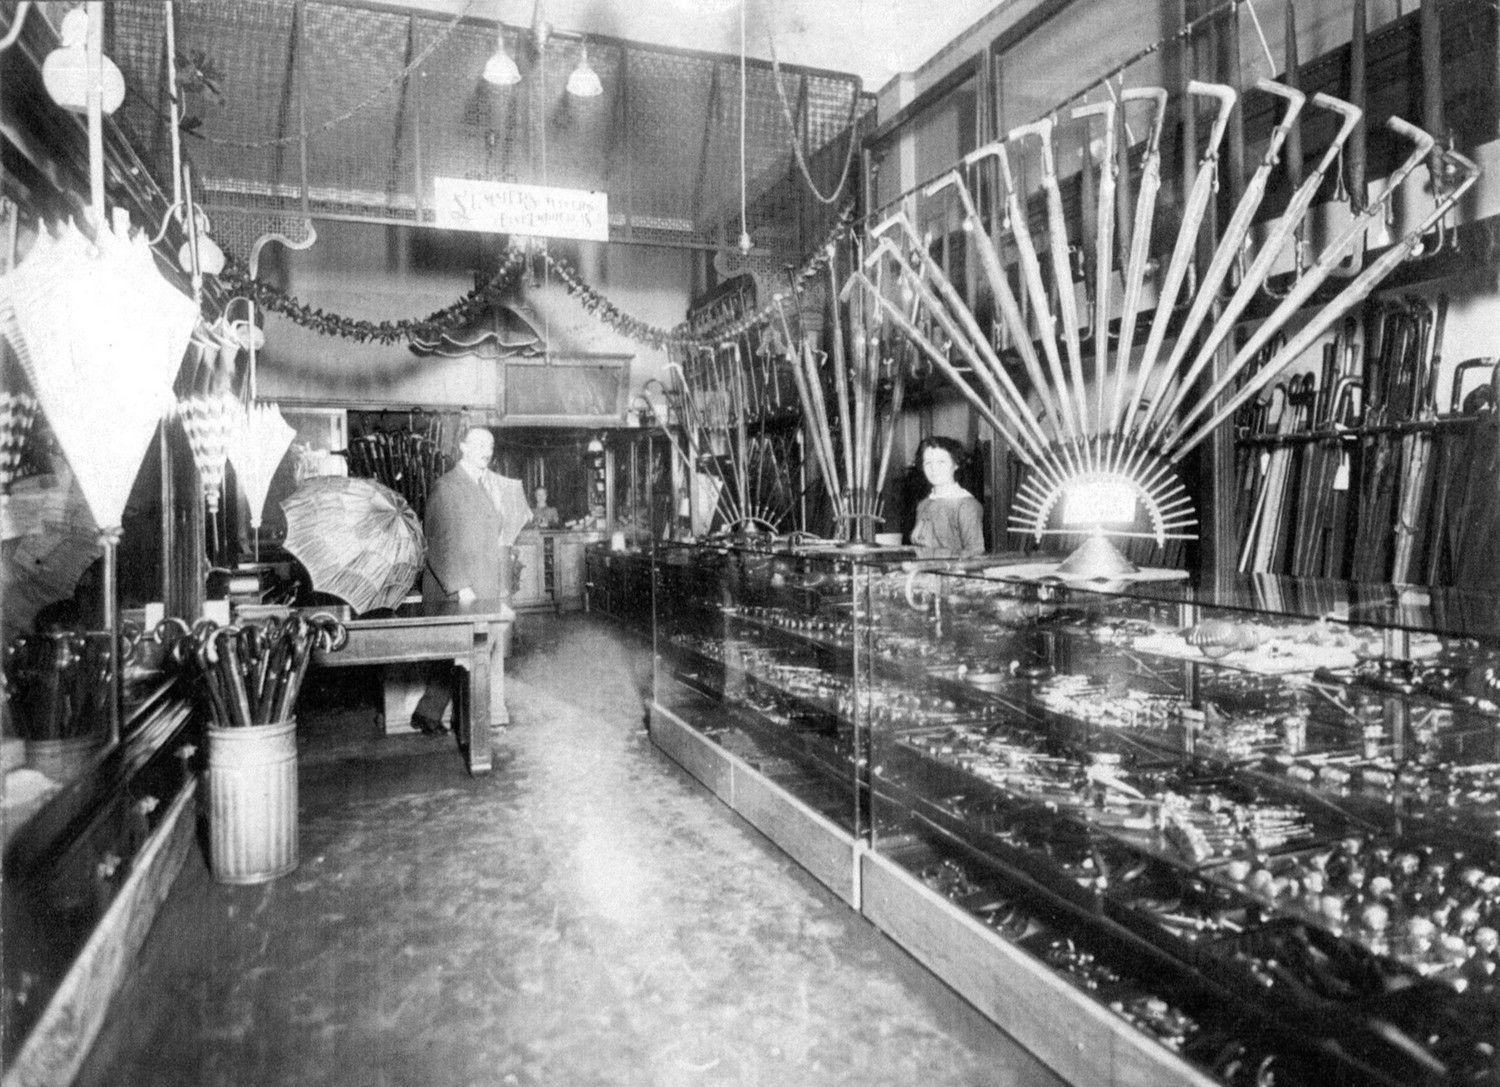 Cleveland Arcade, Cleveland Ohio Umbrella shop in the arcade pre-1900